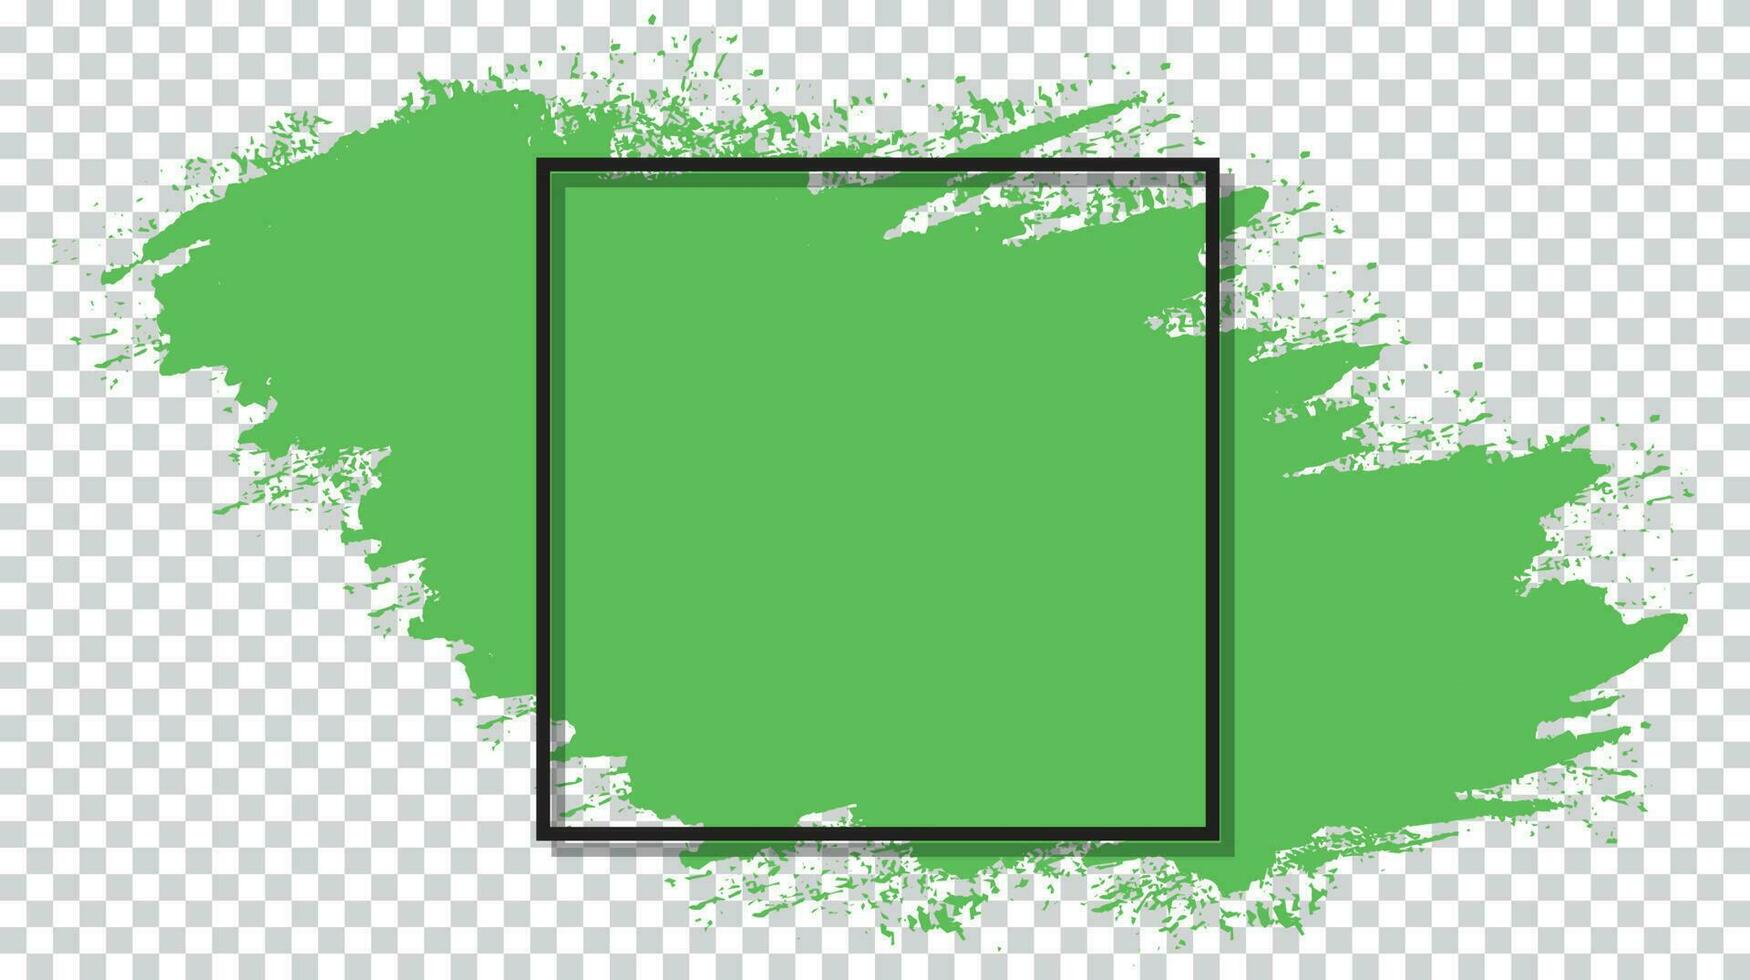 Ink brush stroke green color grunge texture background vector